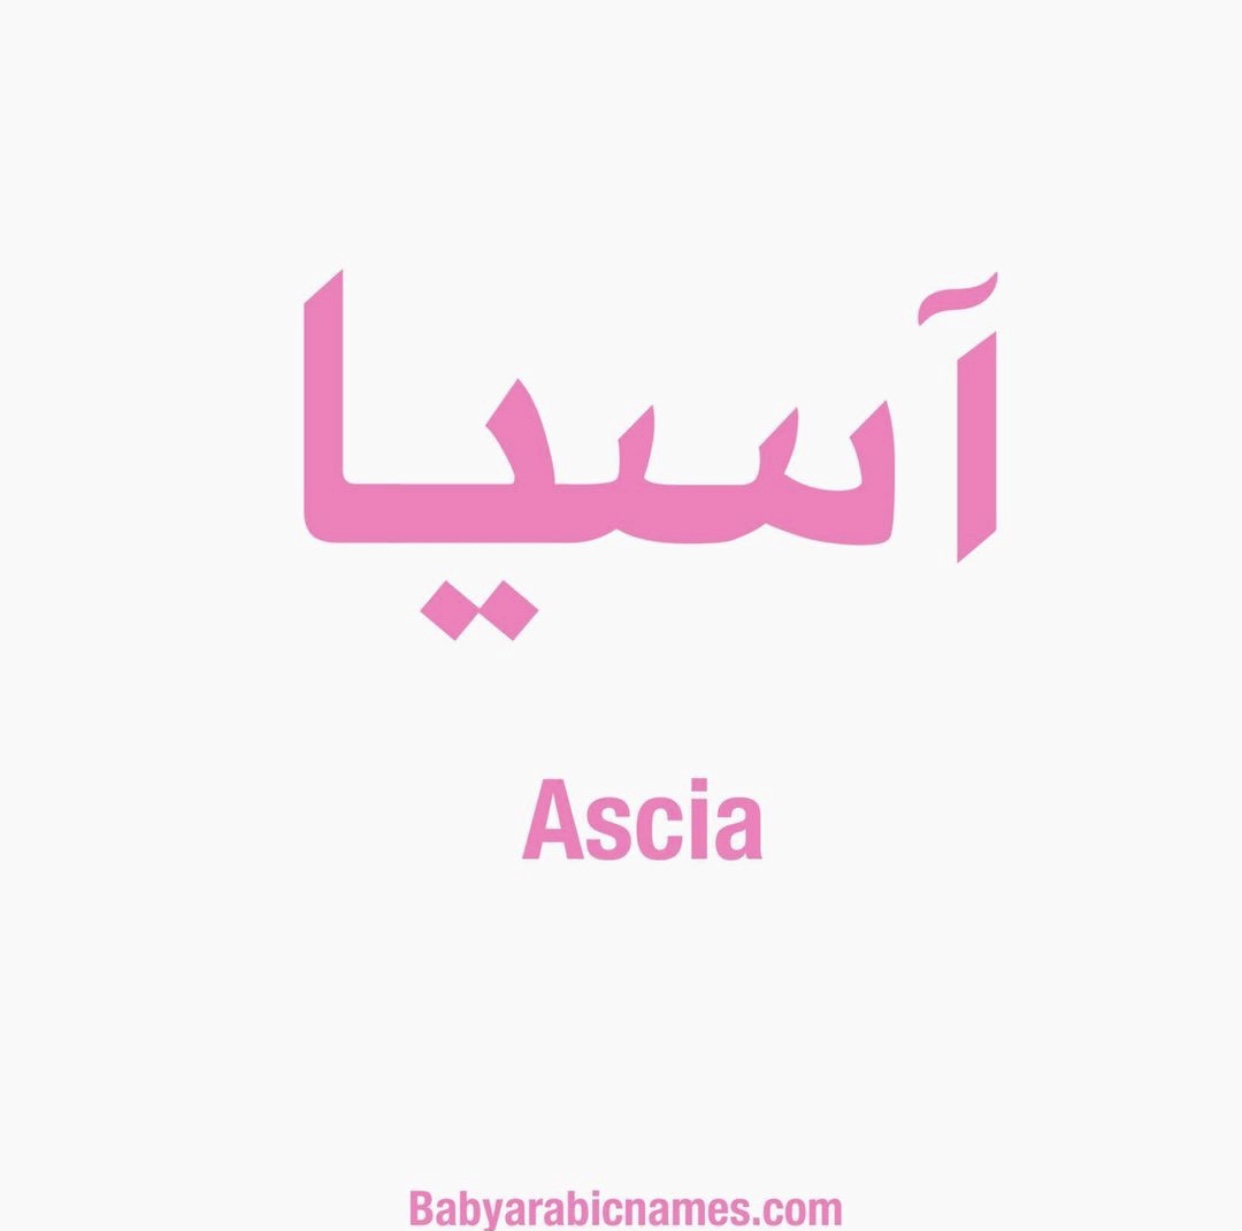 Ascia Baby Arabic Names